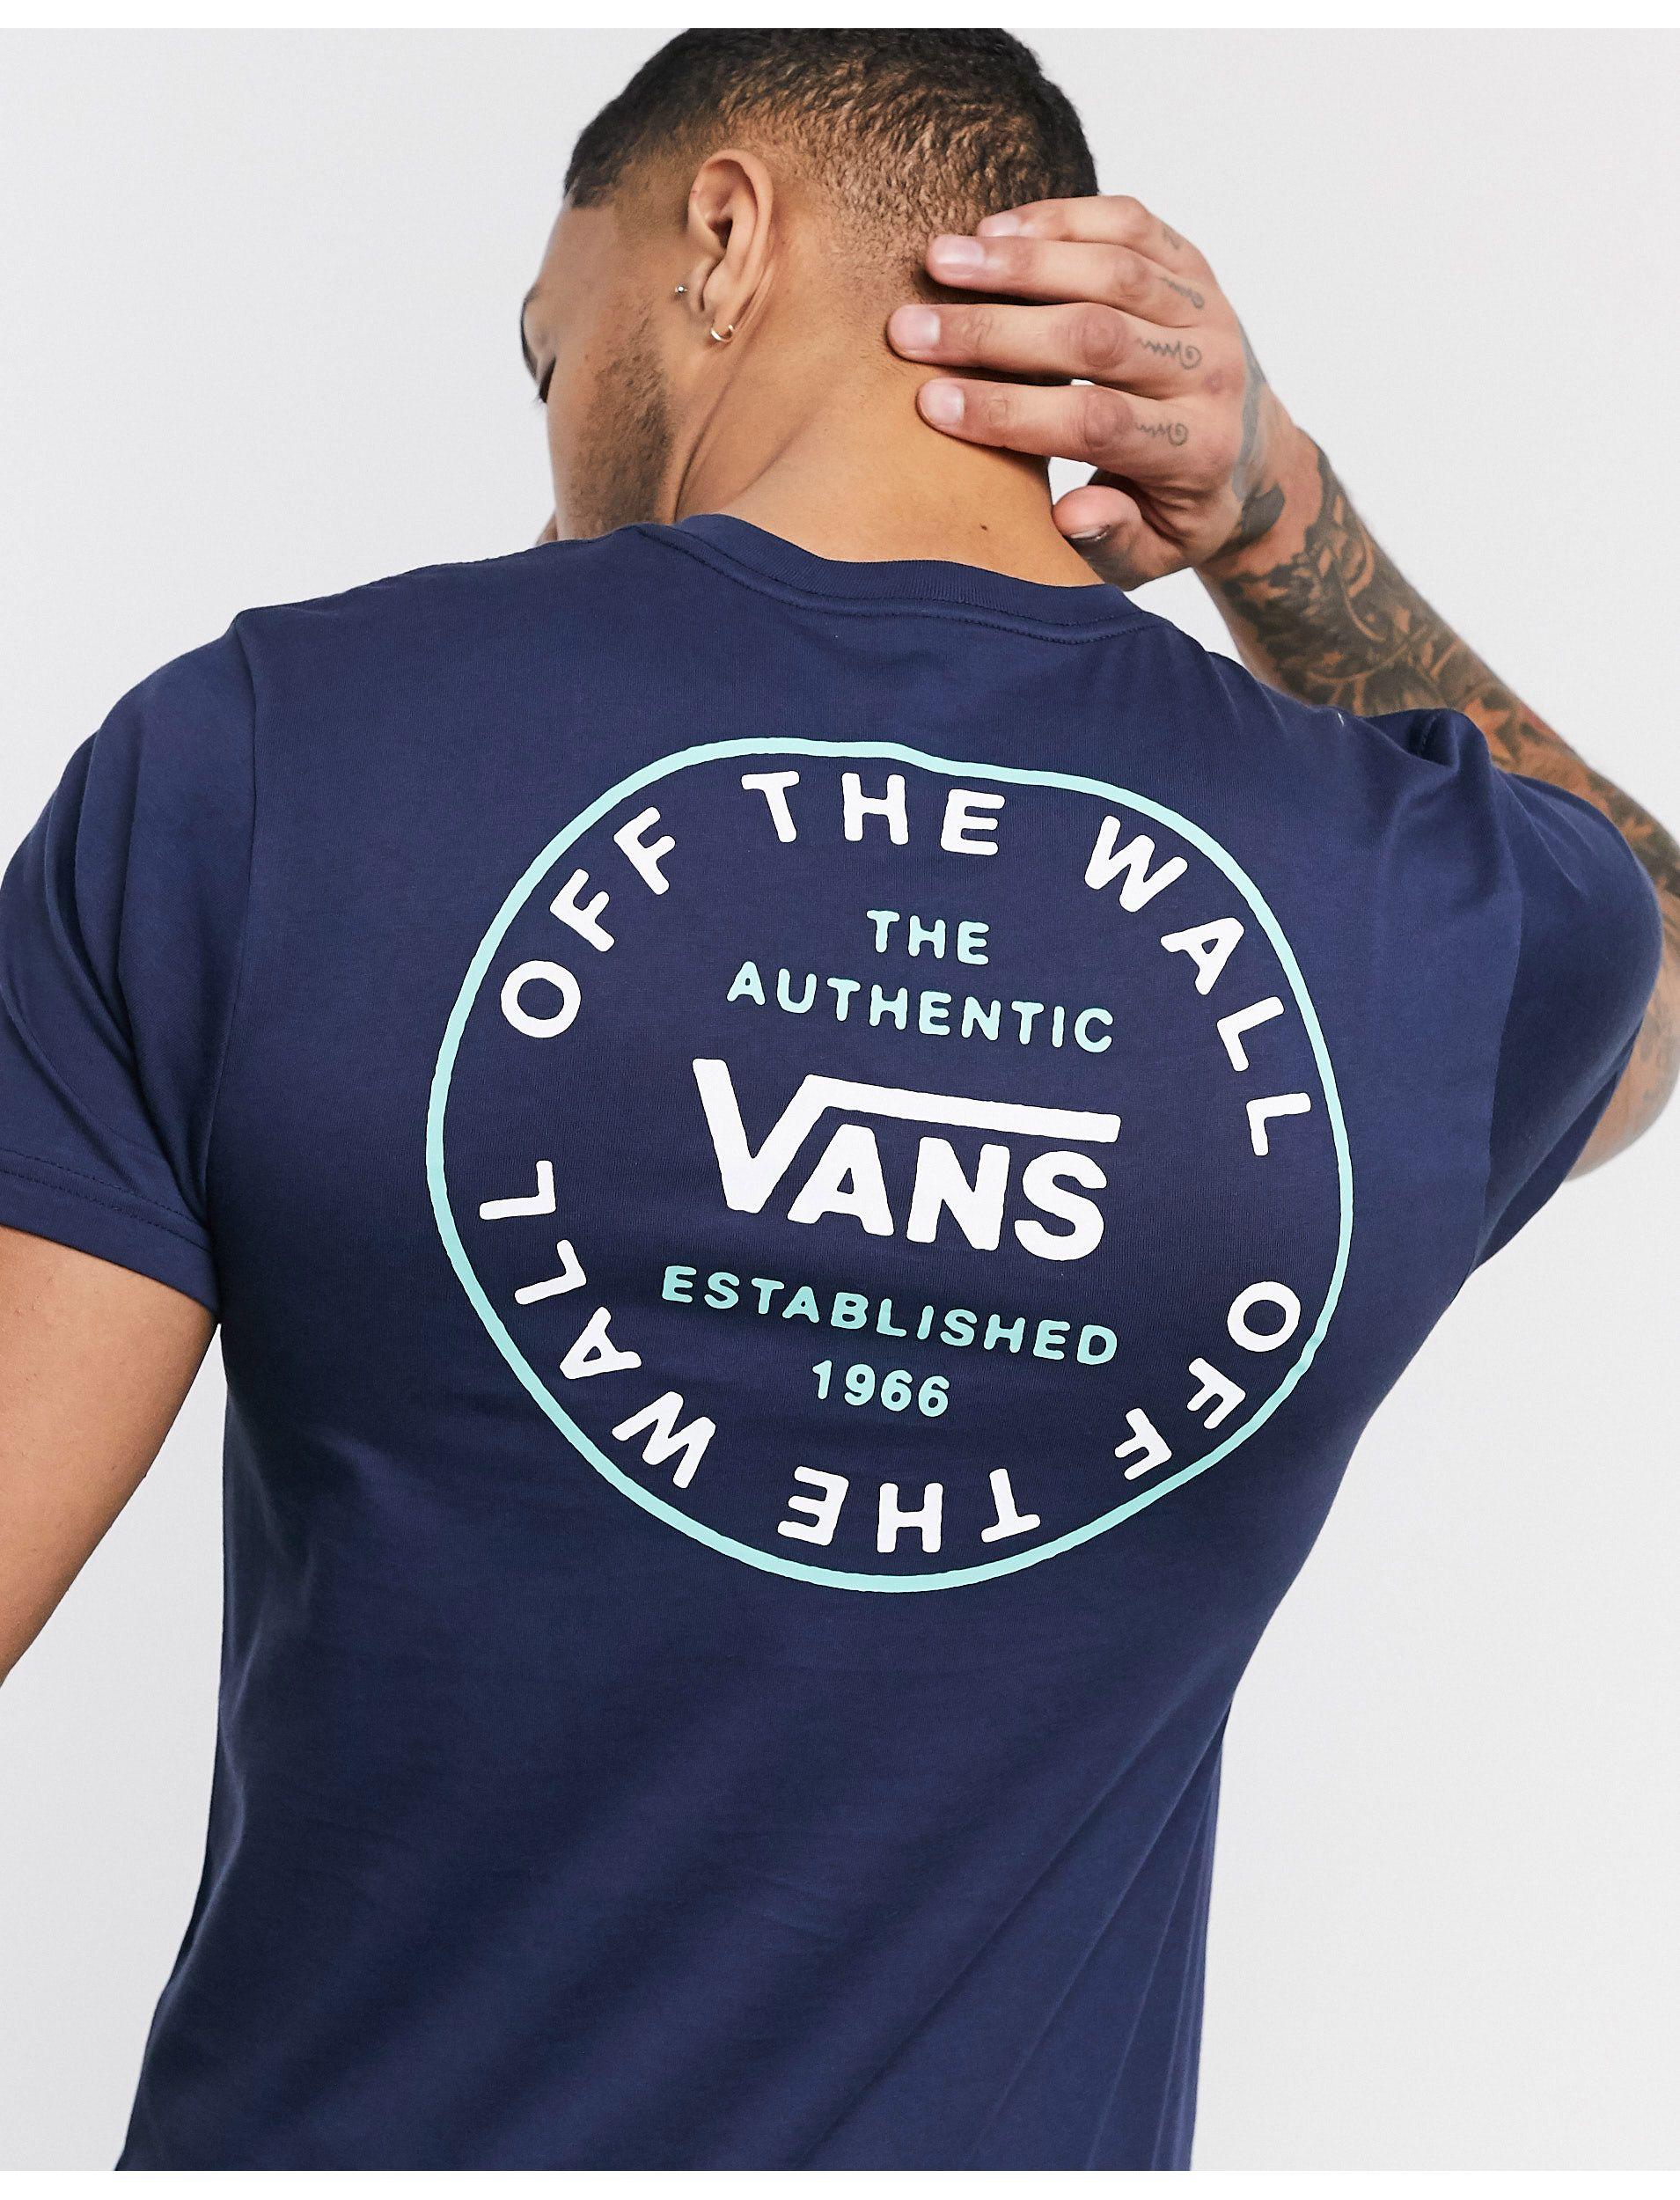 Vans Cotton Old Skool Circle Logo T-shirt in Navy (Blue) for Men - Lyst